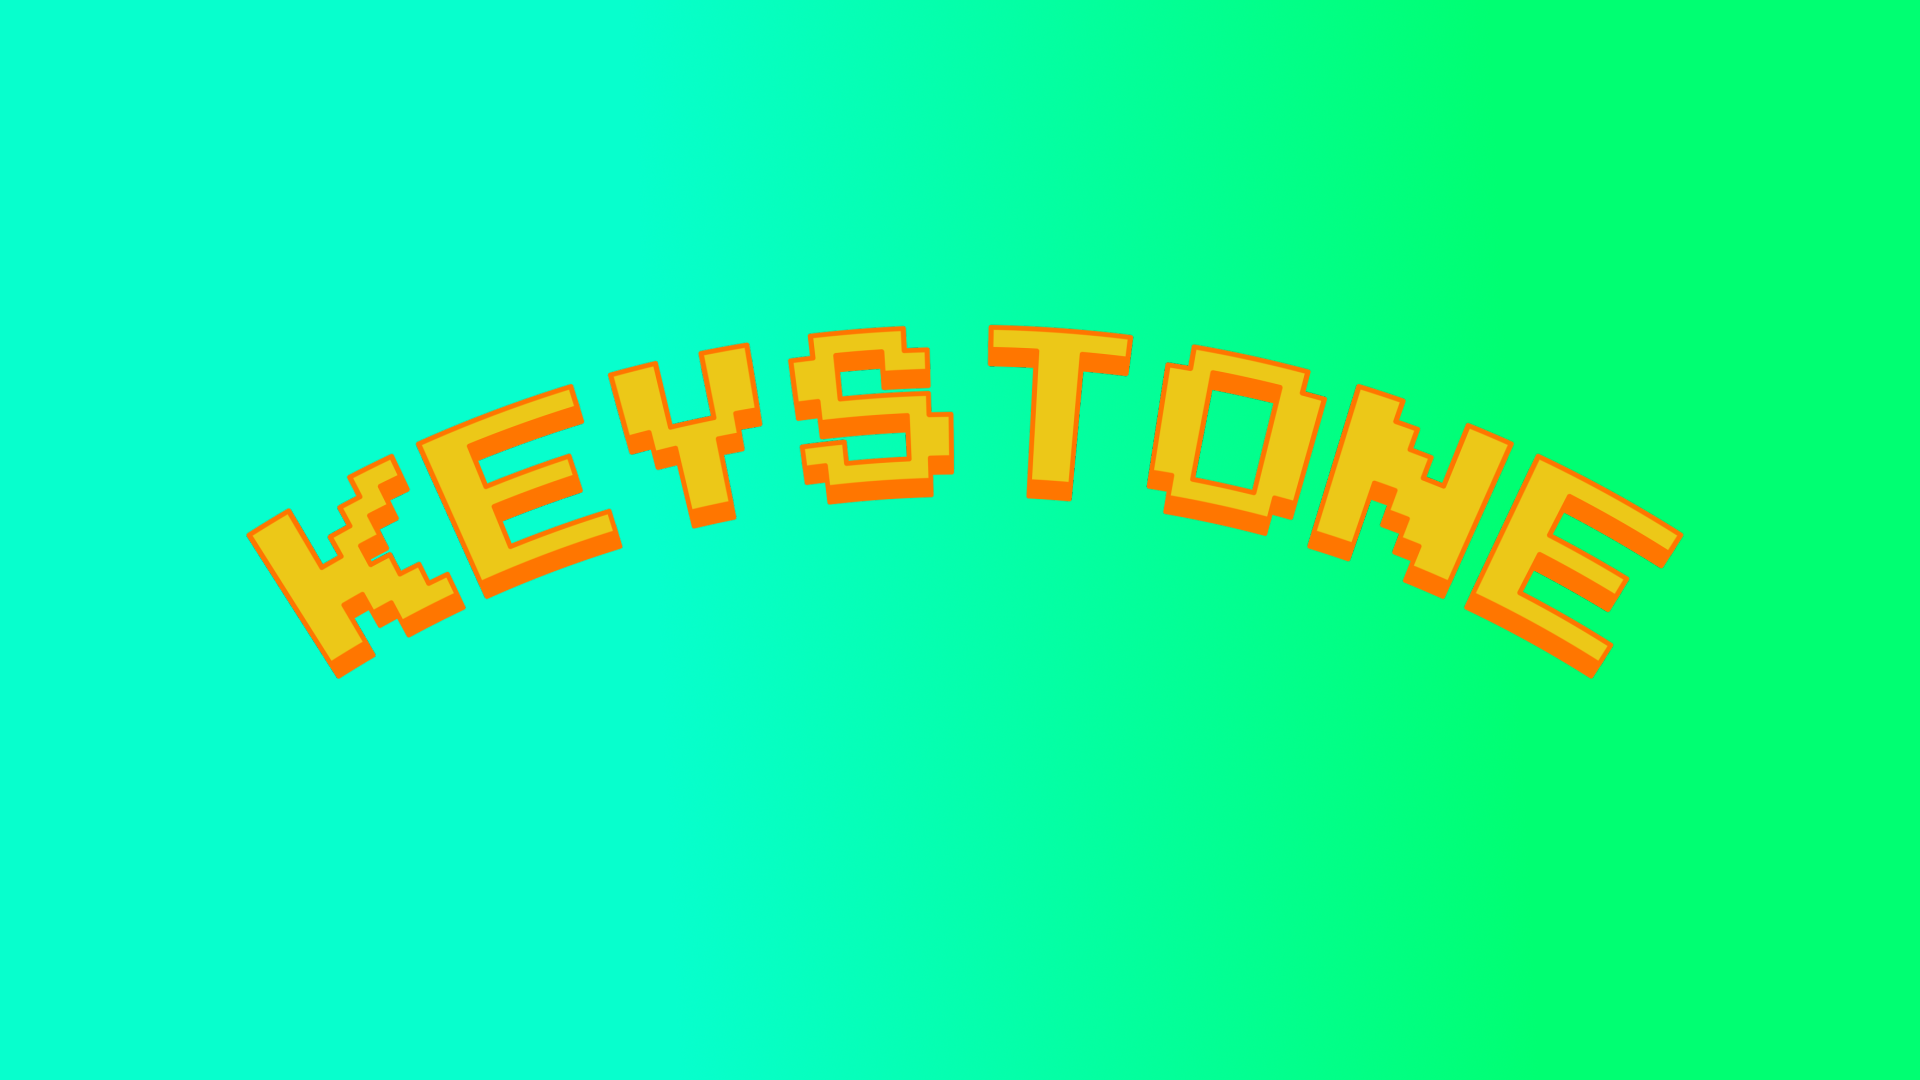 Project Keystone